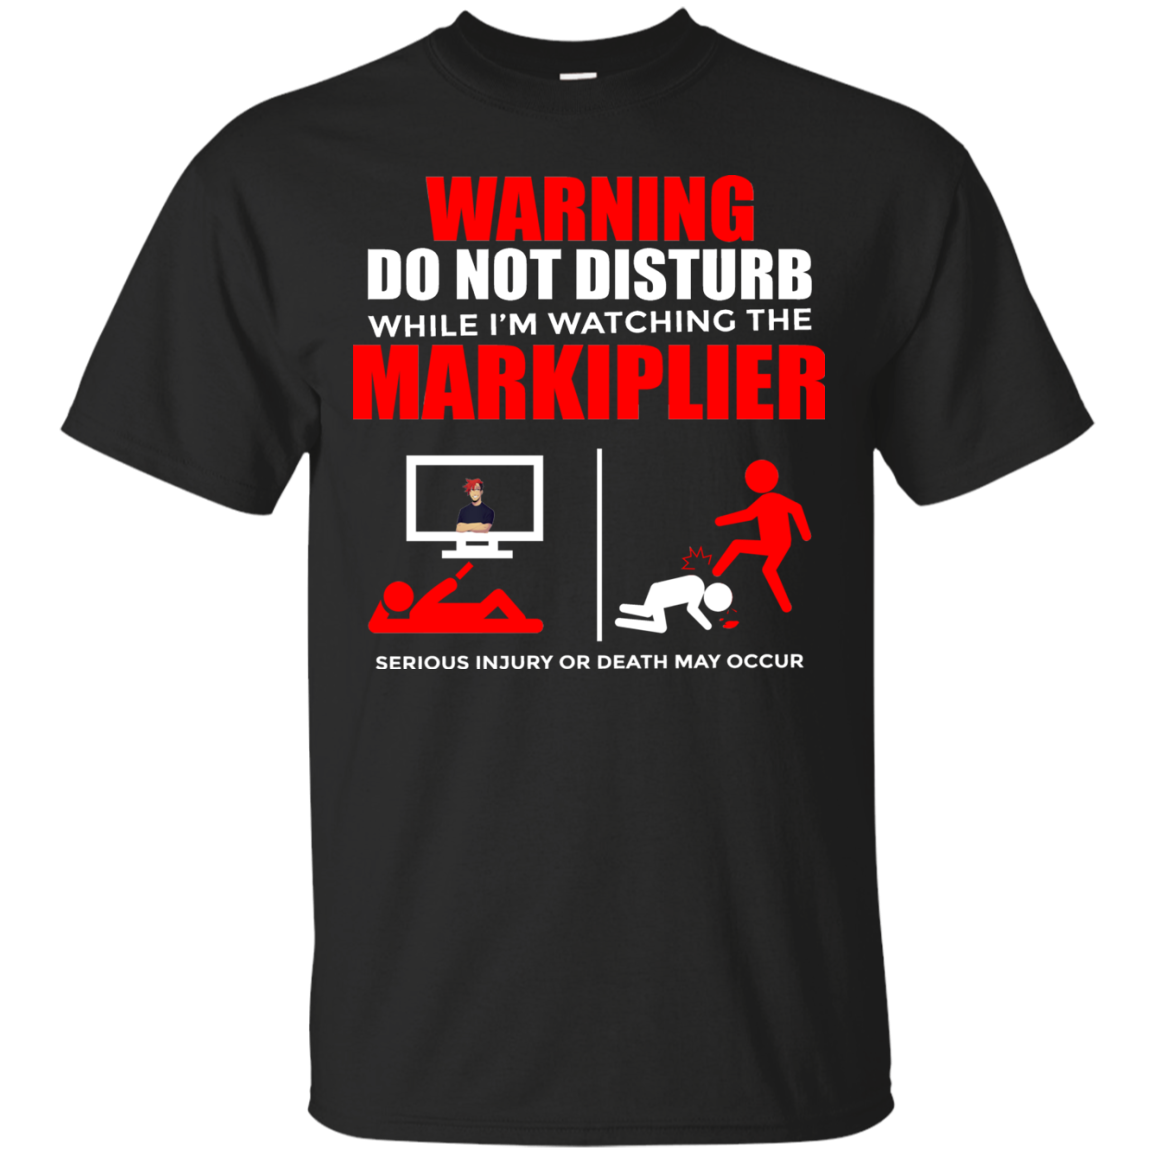 Warning do not disturb while i’m watching the Markiplier shirt, tank top